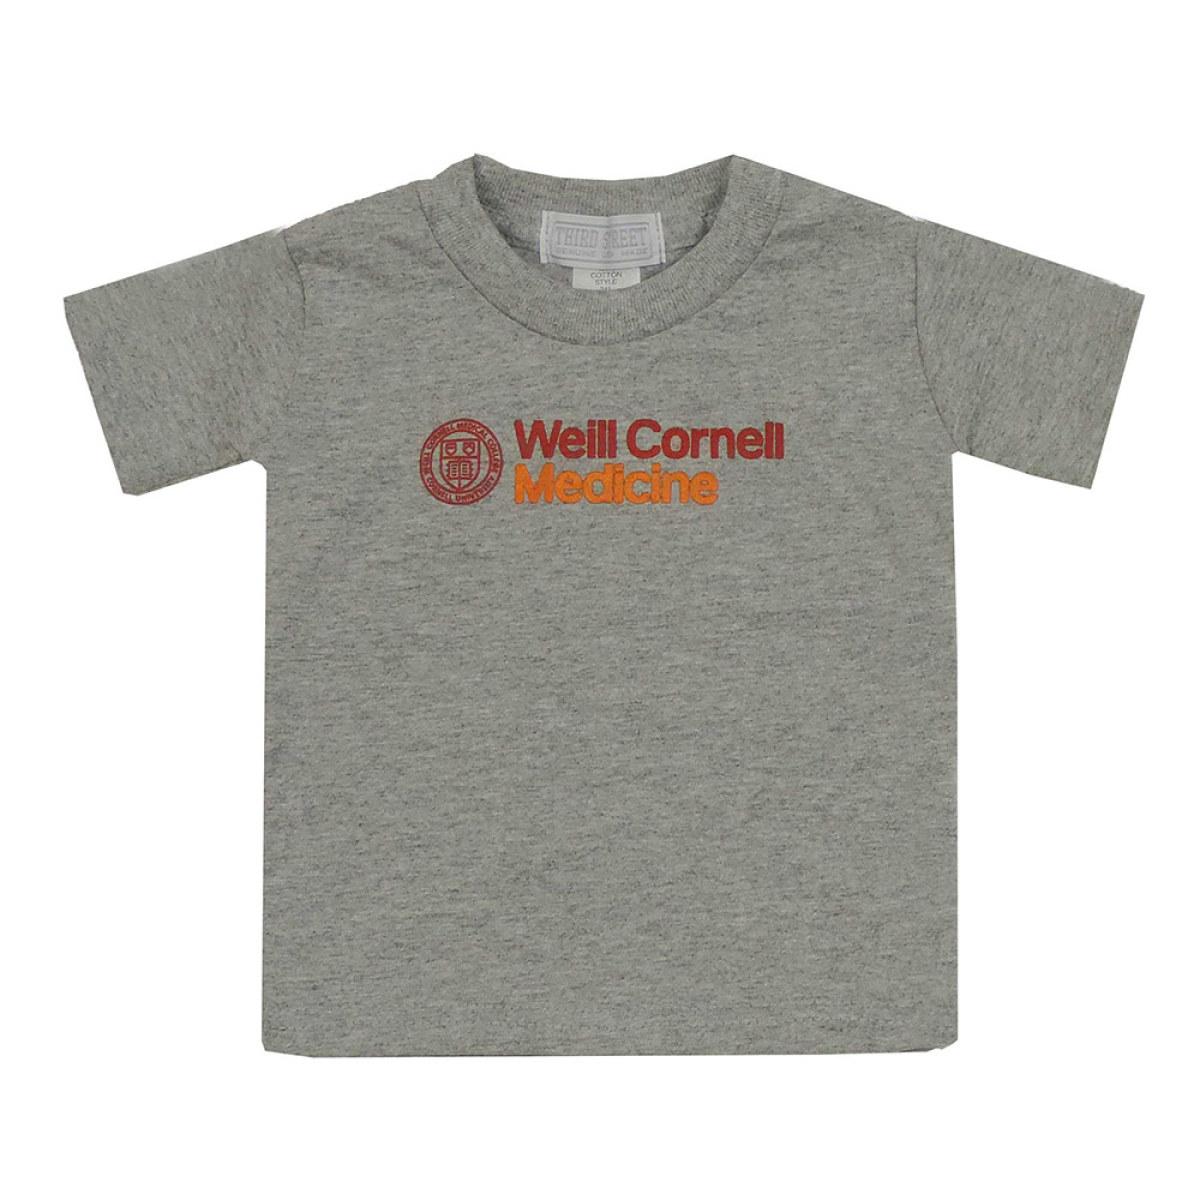 Weill Cornell Medicine Infant Tee